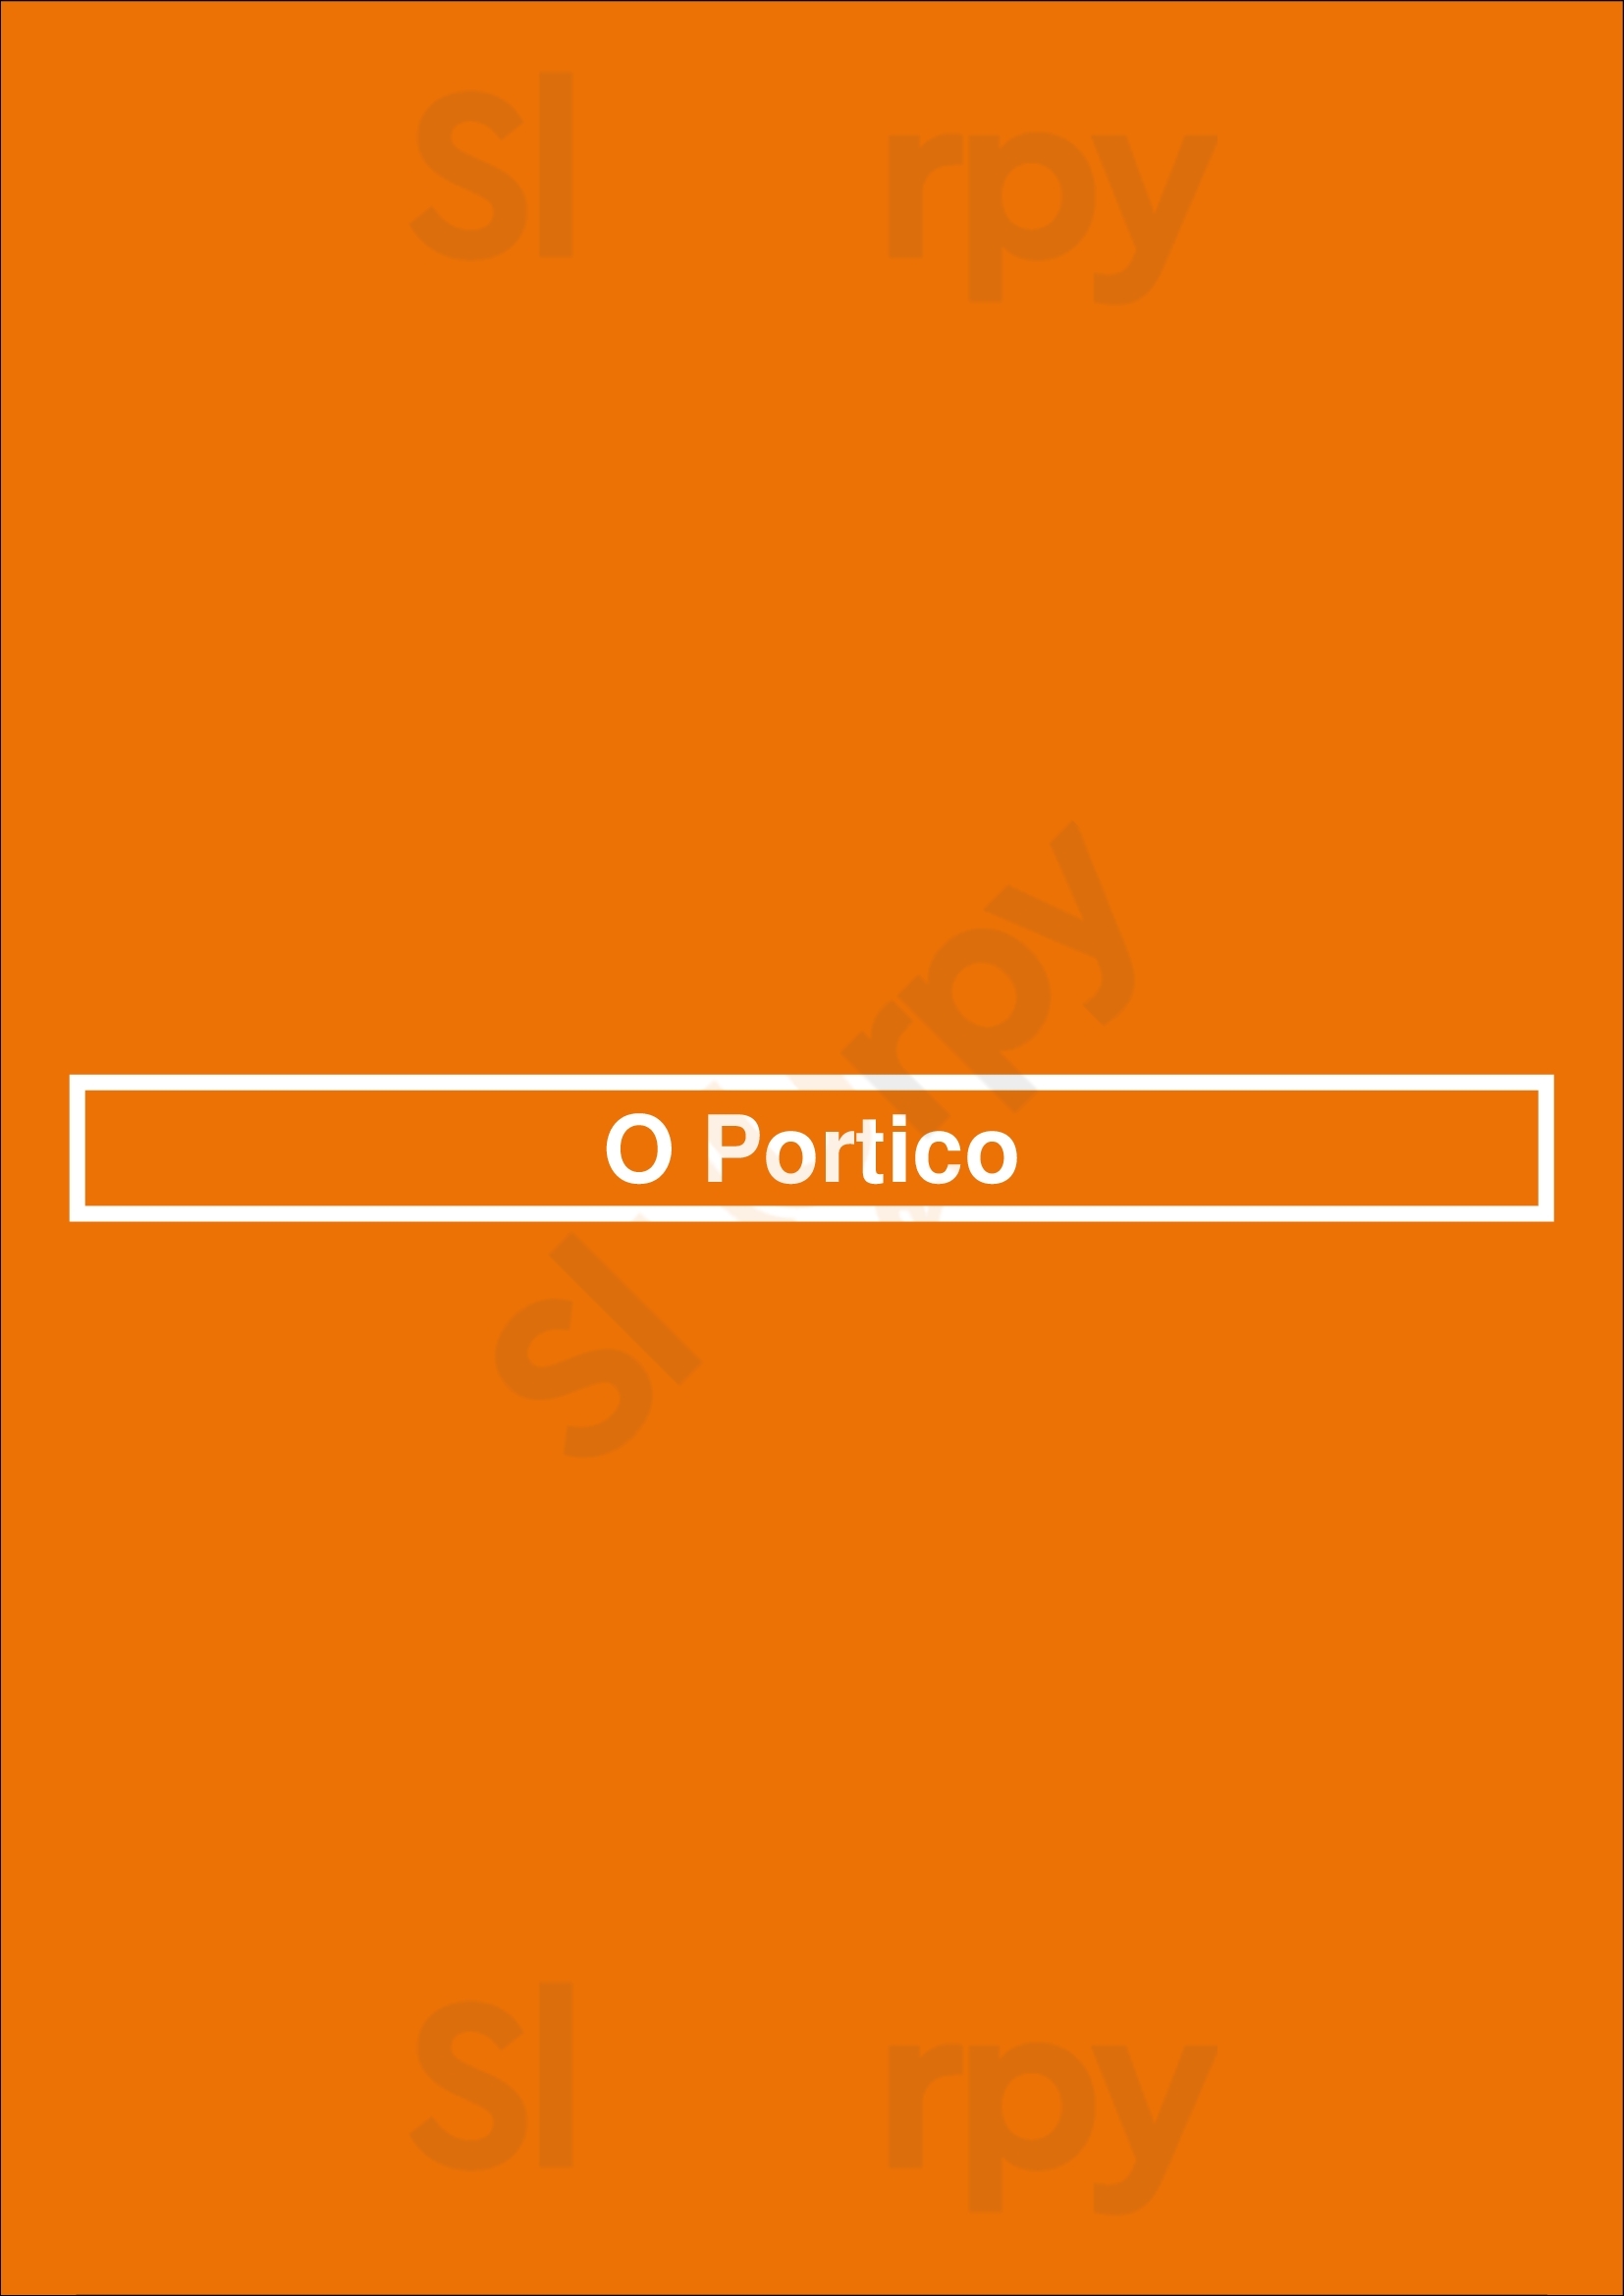 O Portico Braga Menu - 1